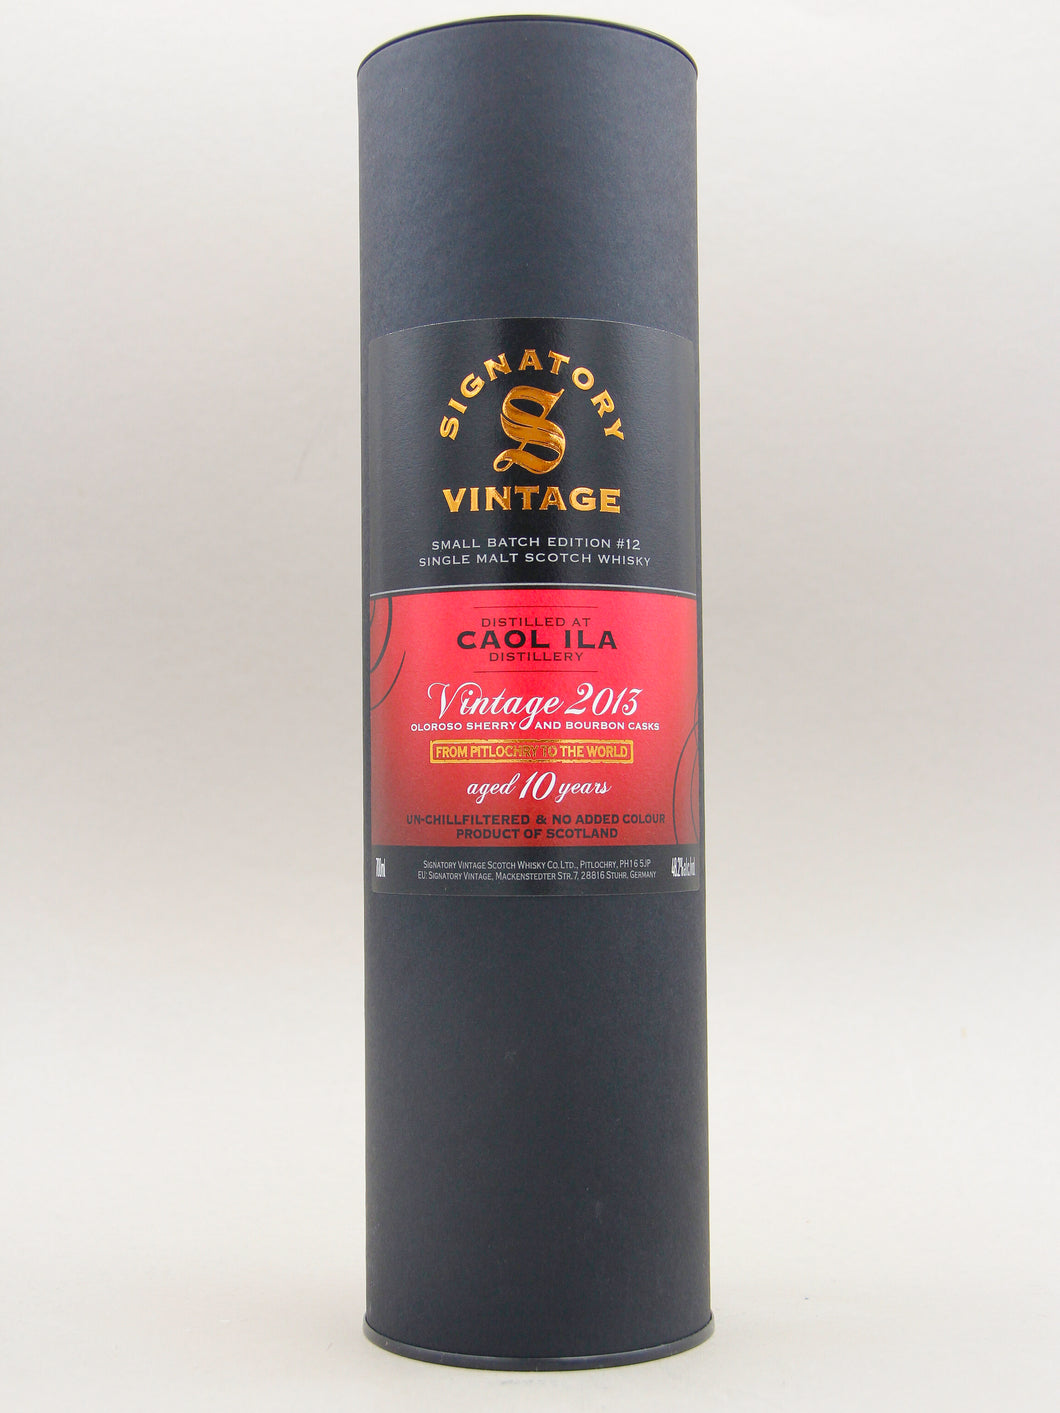 Signatory Vintage, Caol Ila 2013-2023, Small Batch Edition #12, Aged 10 years, Oloroso Sherry and Bourbon Casks, Single Malt Scotch Whisky (48.2%, 70cl)